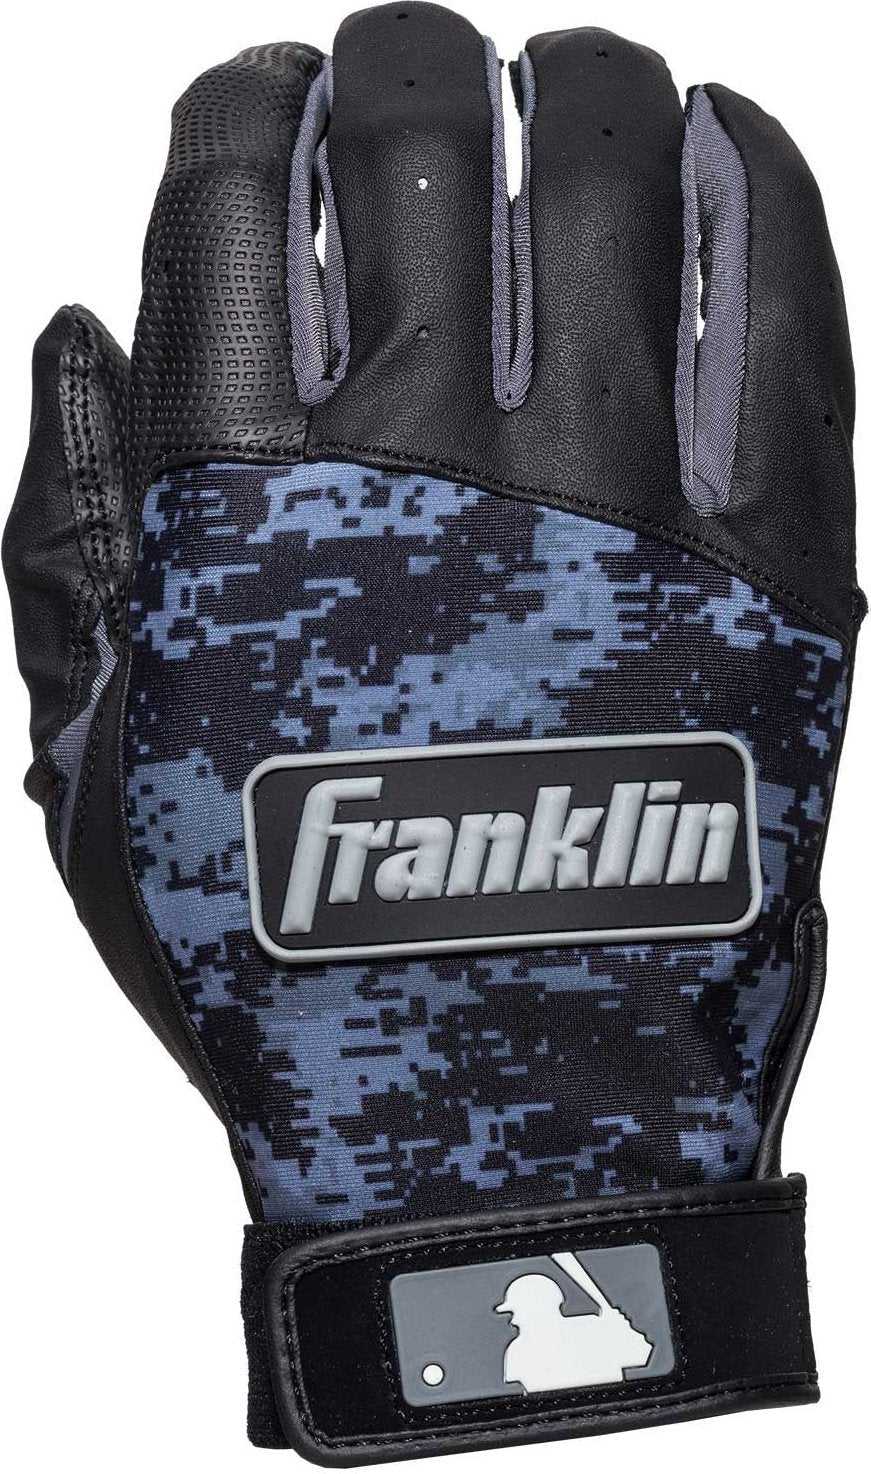 Franklin Digitek Batting Gloves - Black Black Camo - HIT a Double